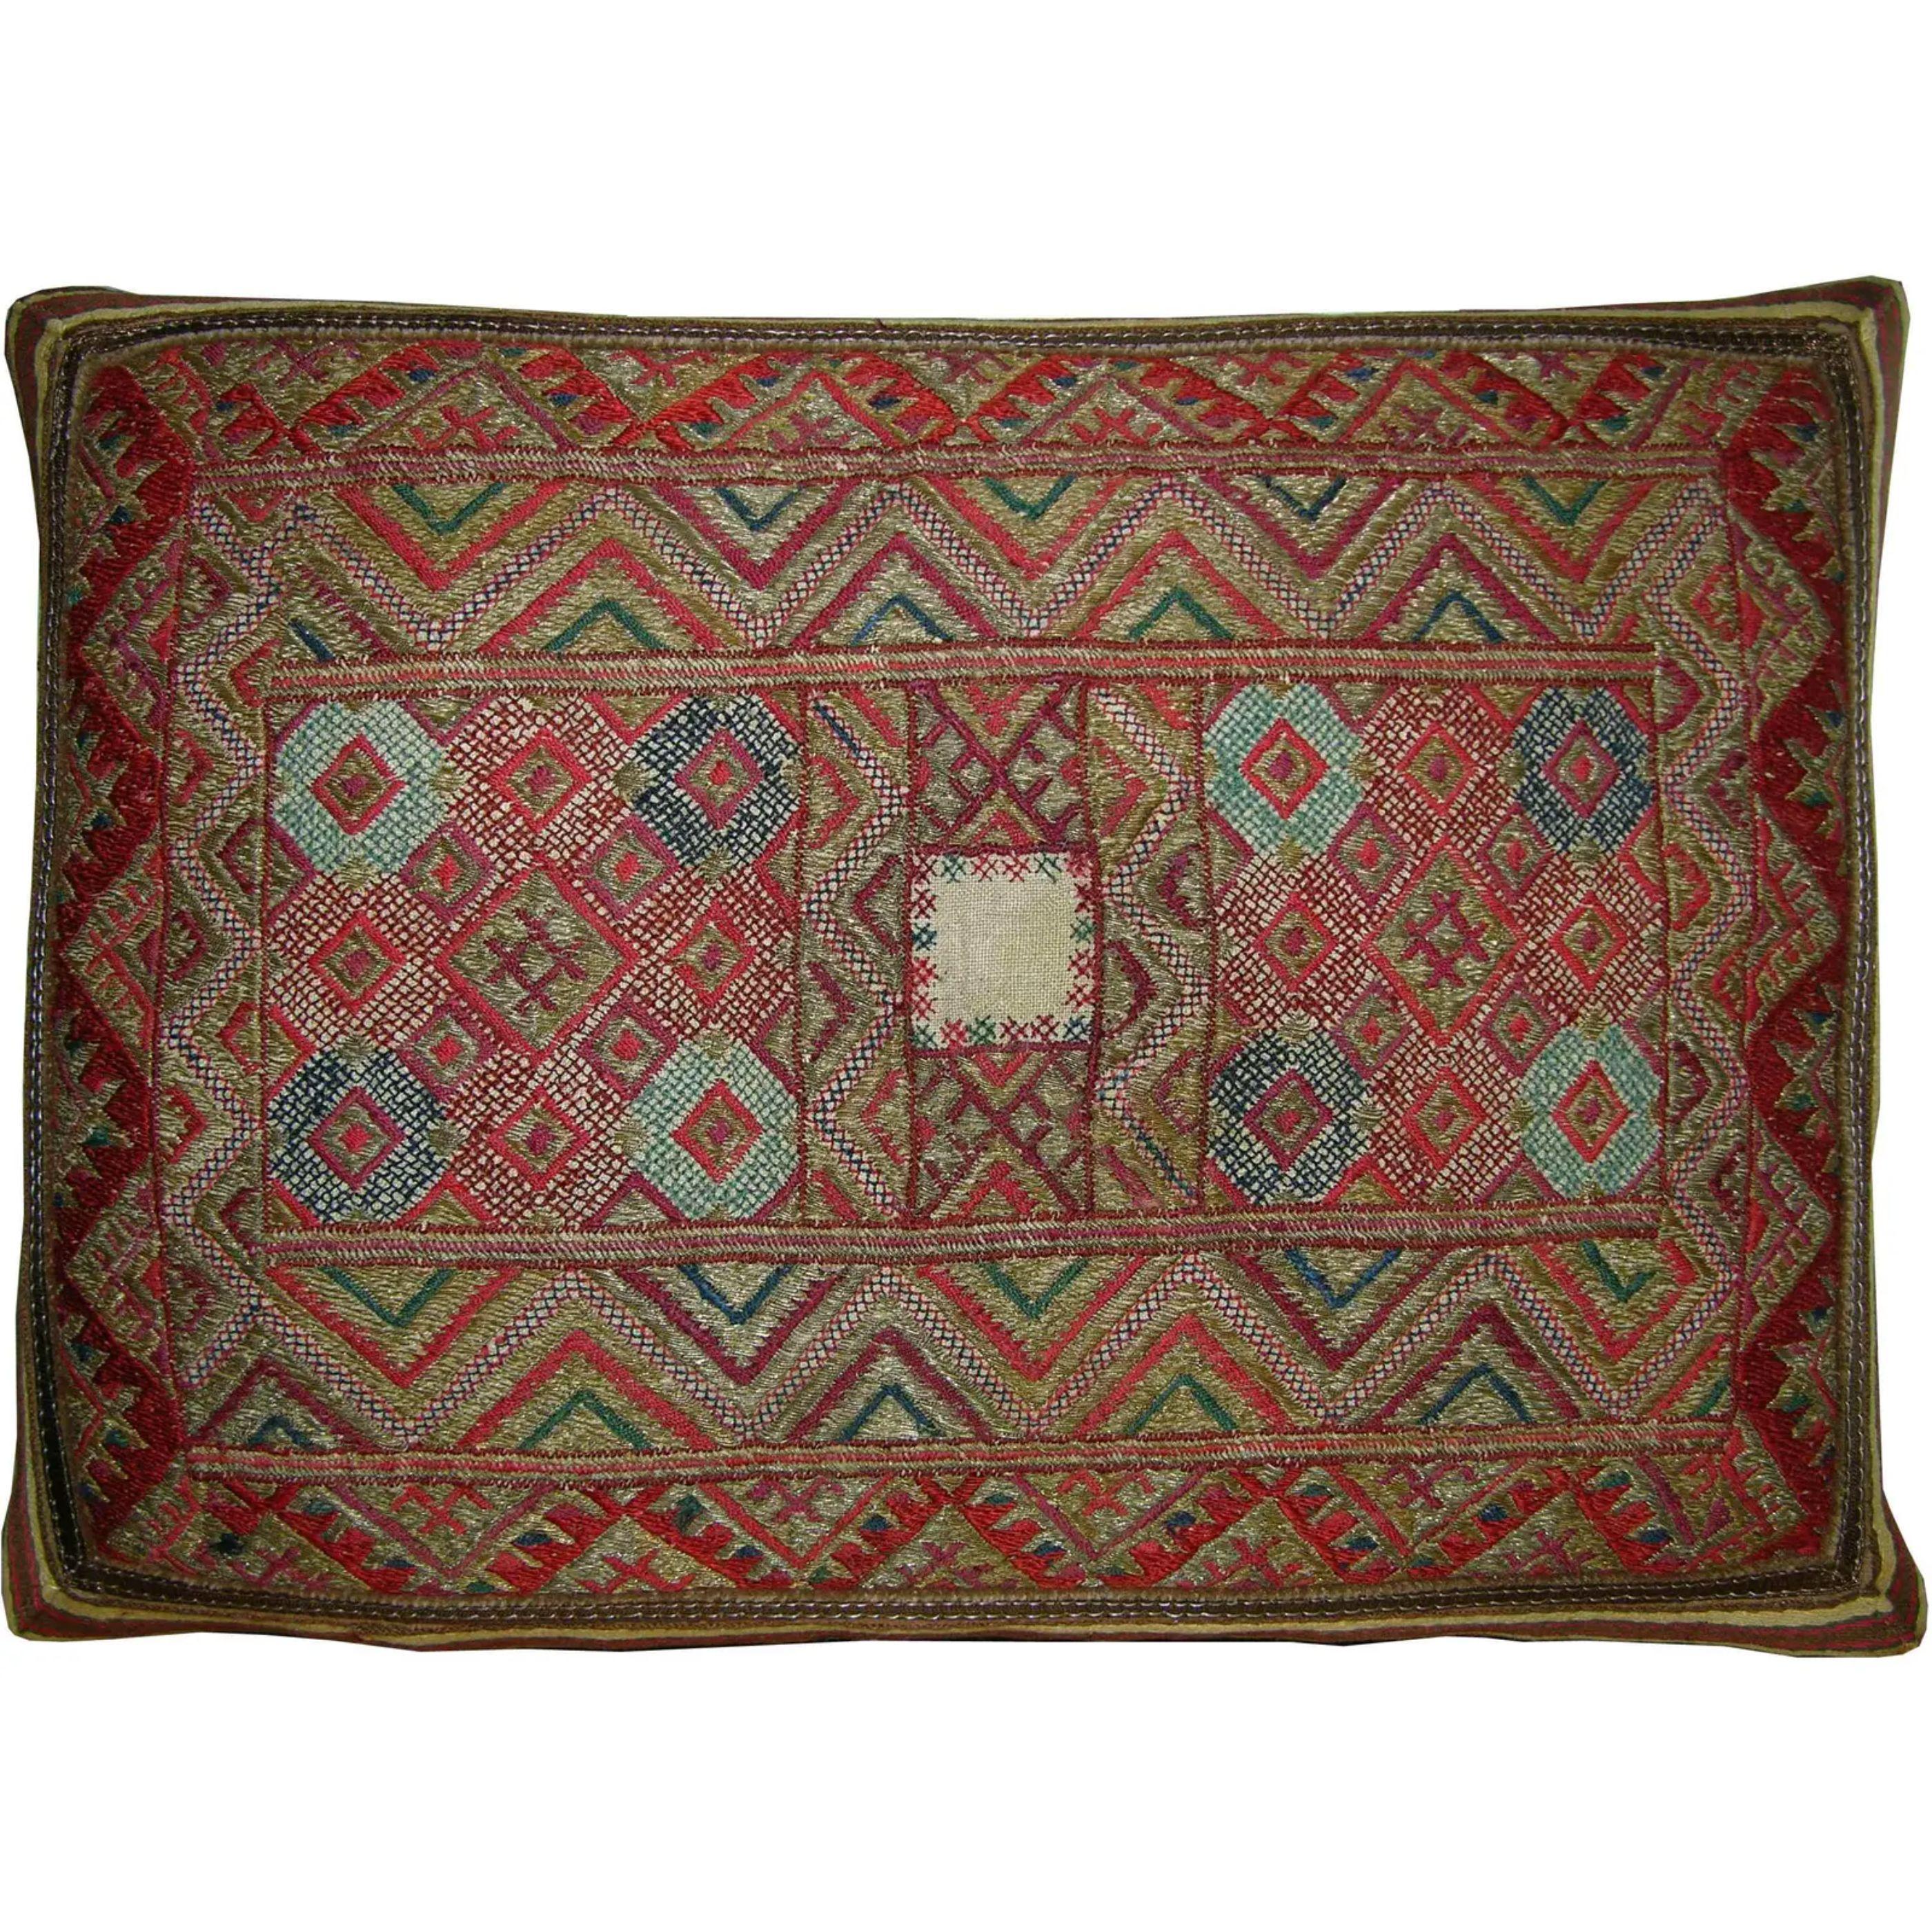 Ca. 1880 Antique Metalic Silk Soumak Uzbak Pillow 19 X 14. A beautiful textile accent!